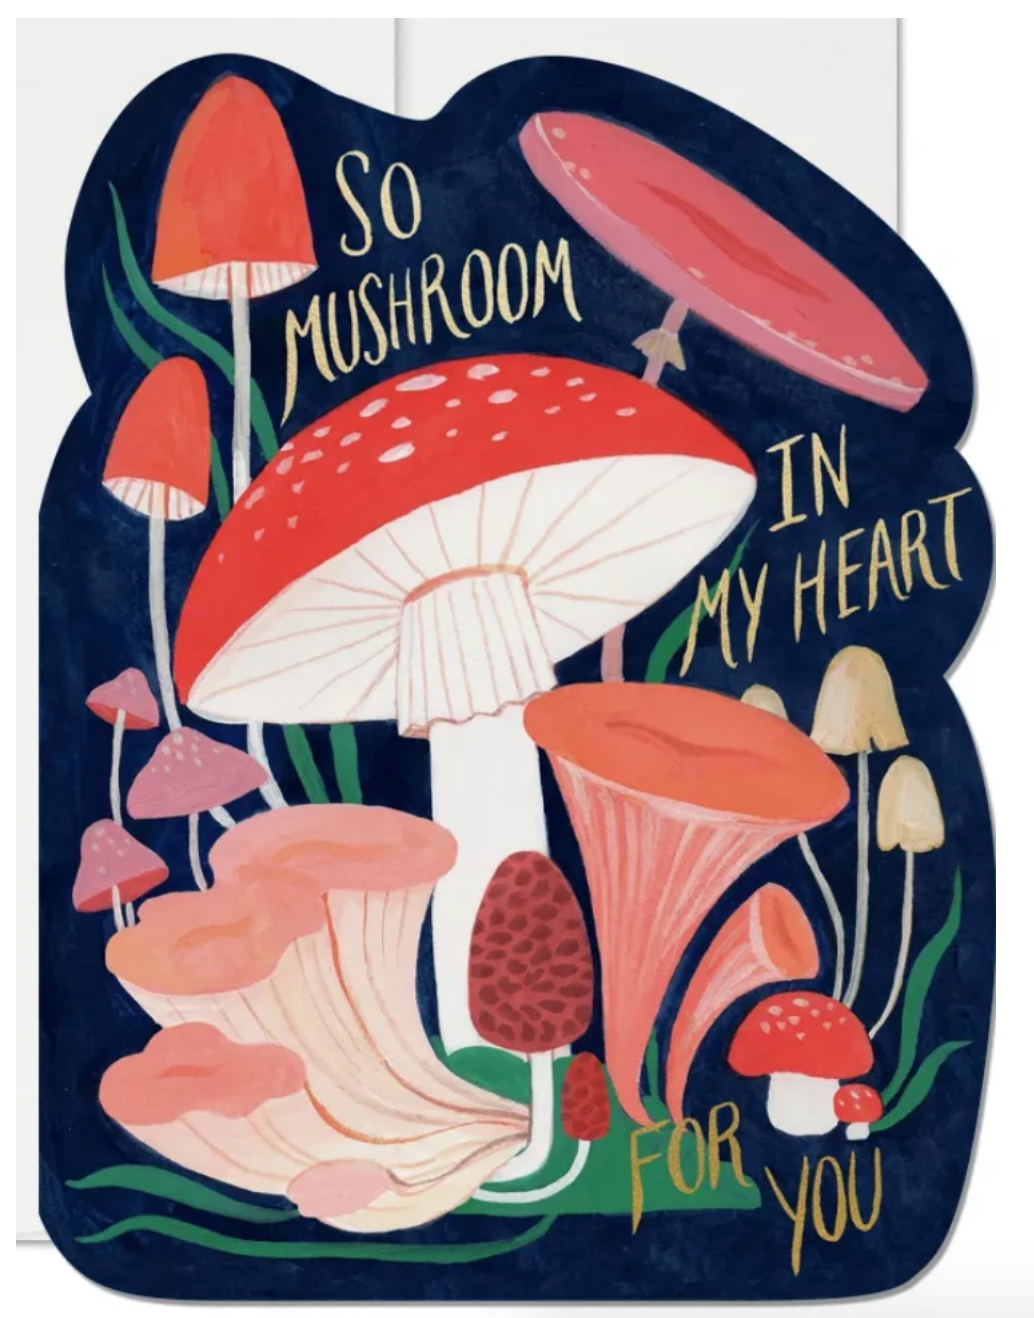 So Mushroom in my Heart Greeting Card